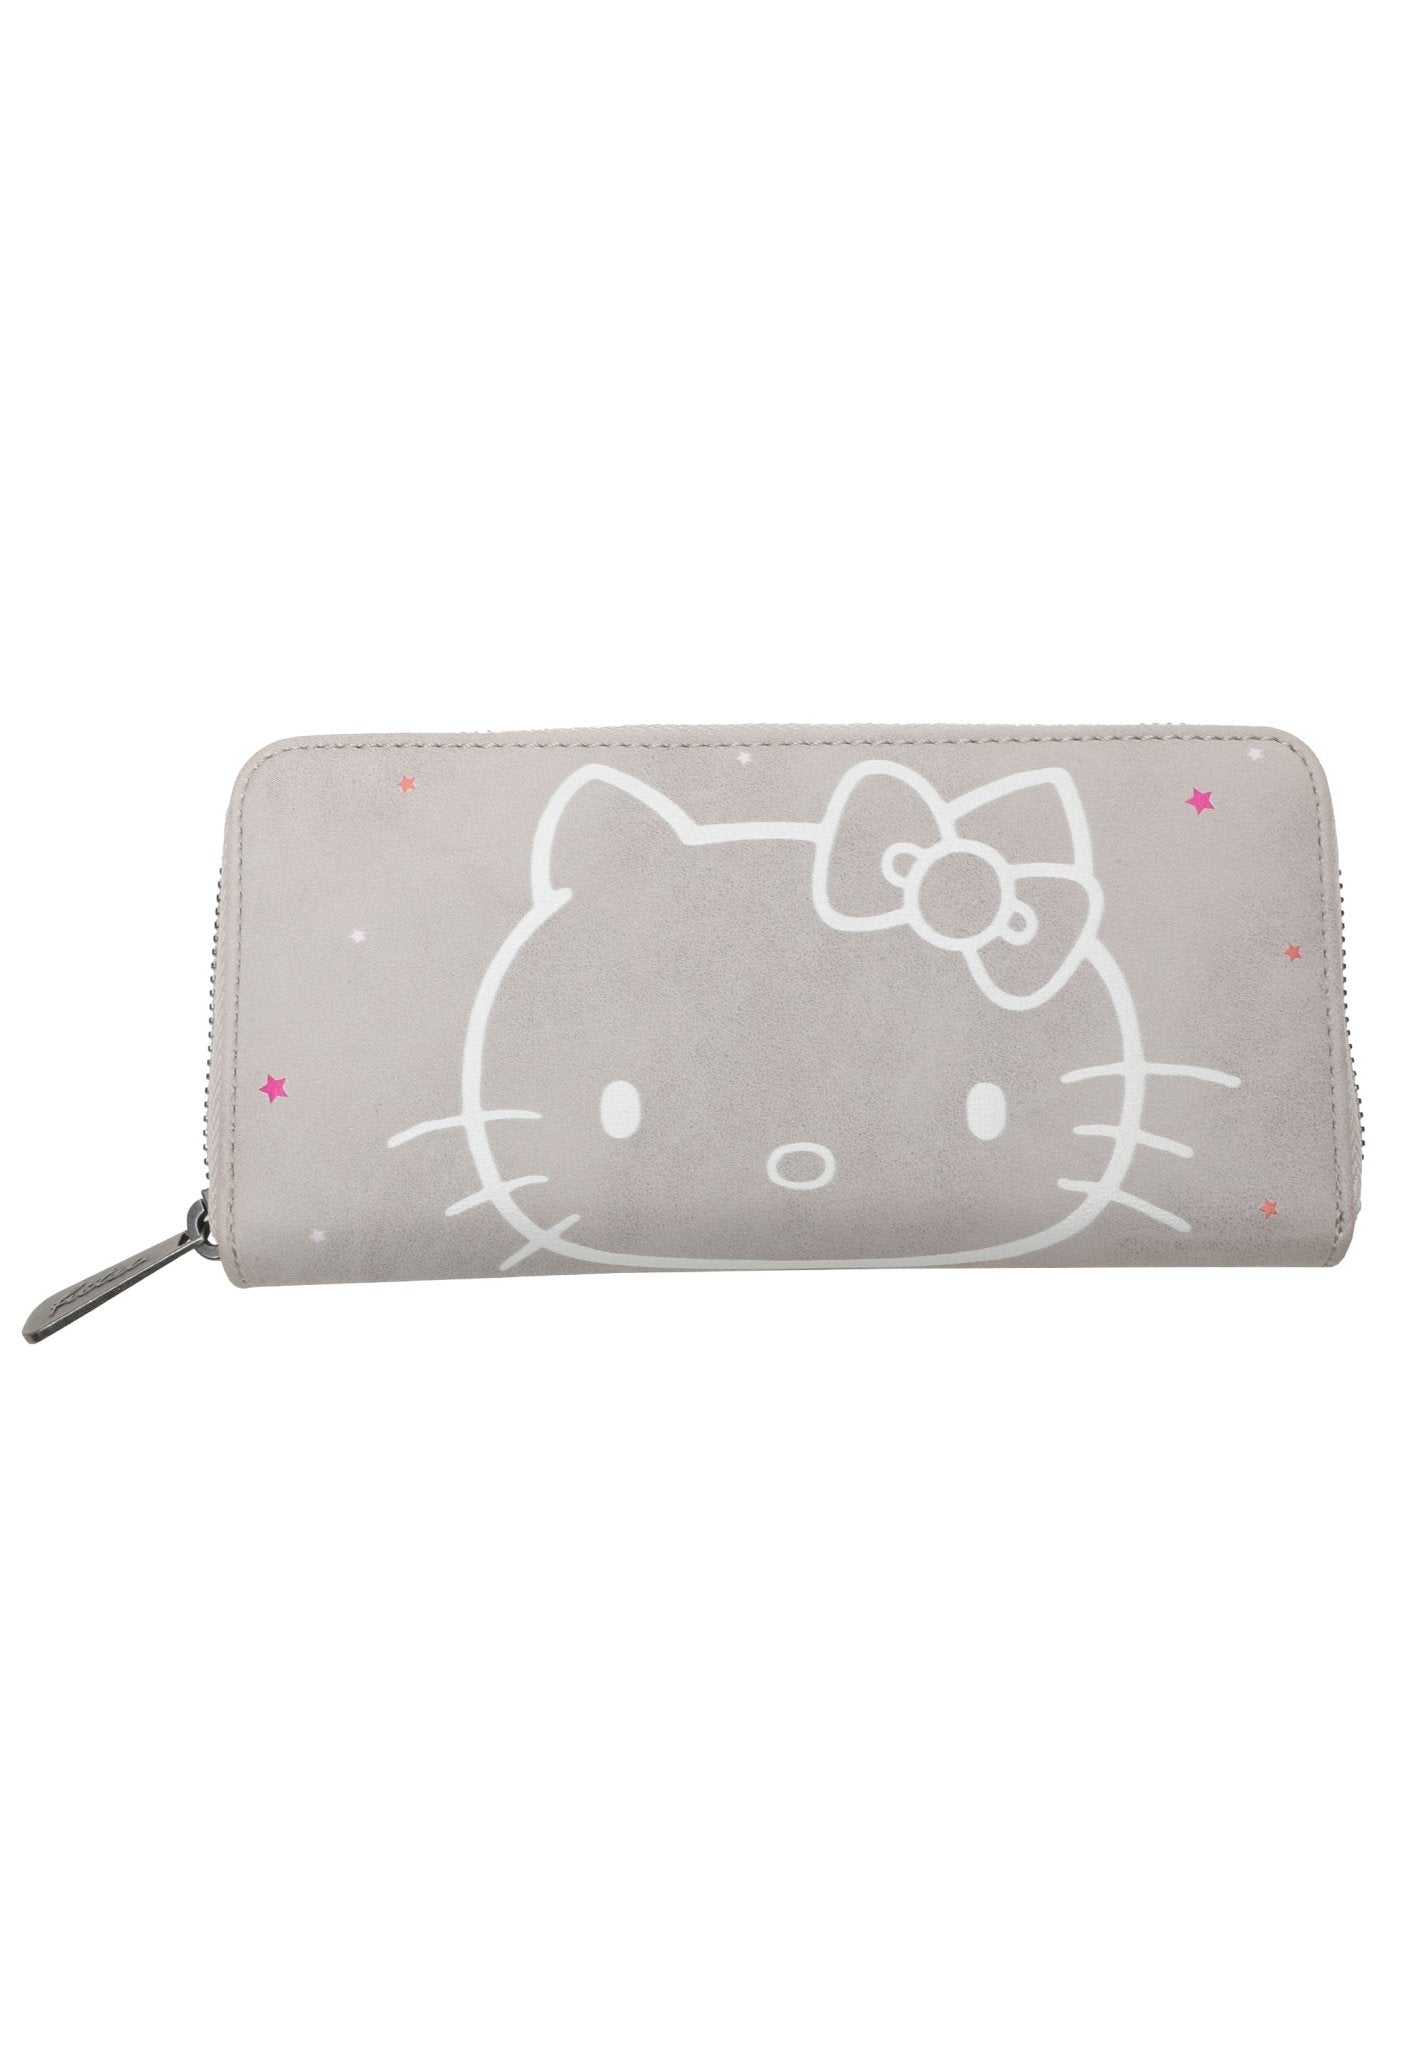 Hello Kitty fritzi limited Wallet - Fritzi aus Preußen - Kitty Stone